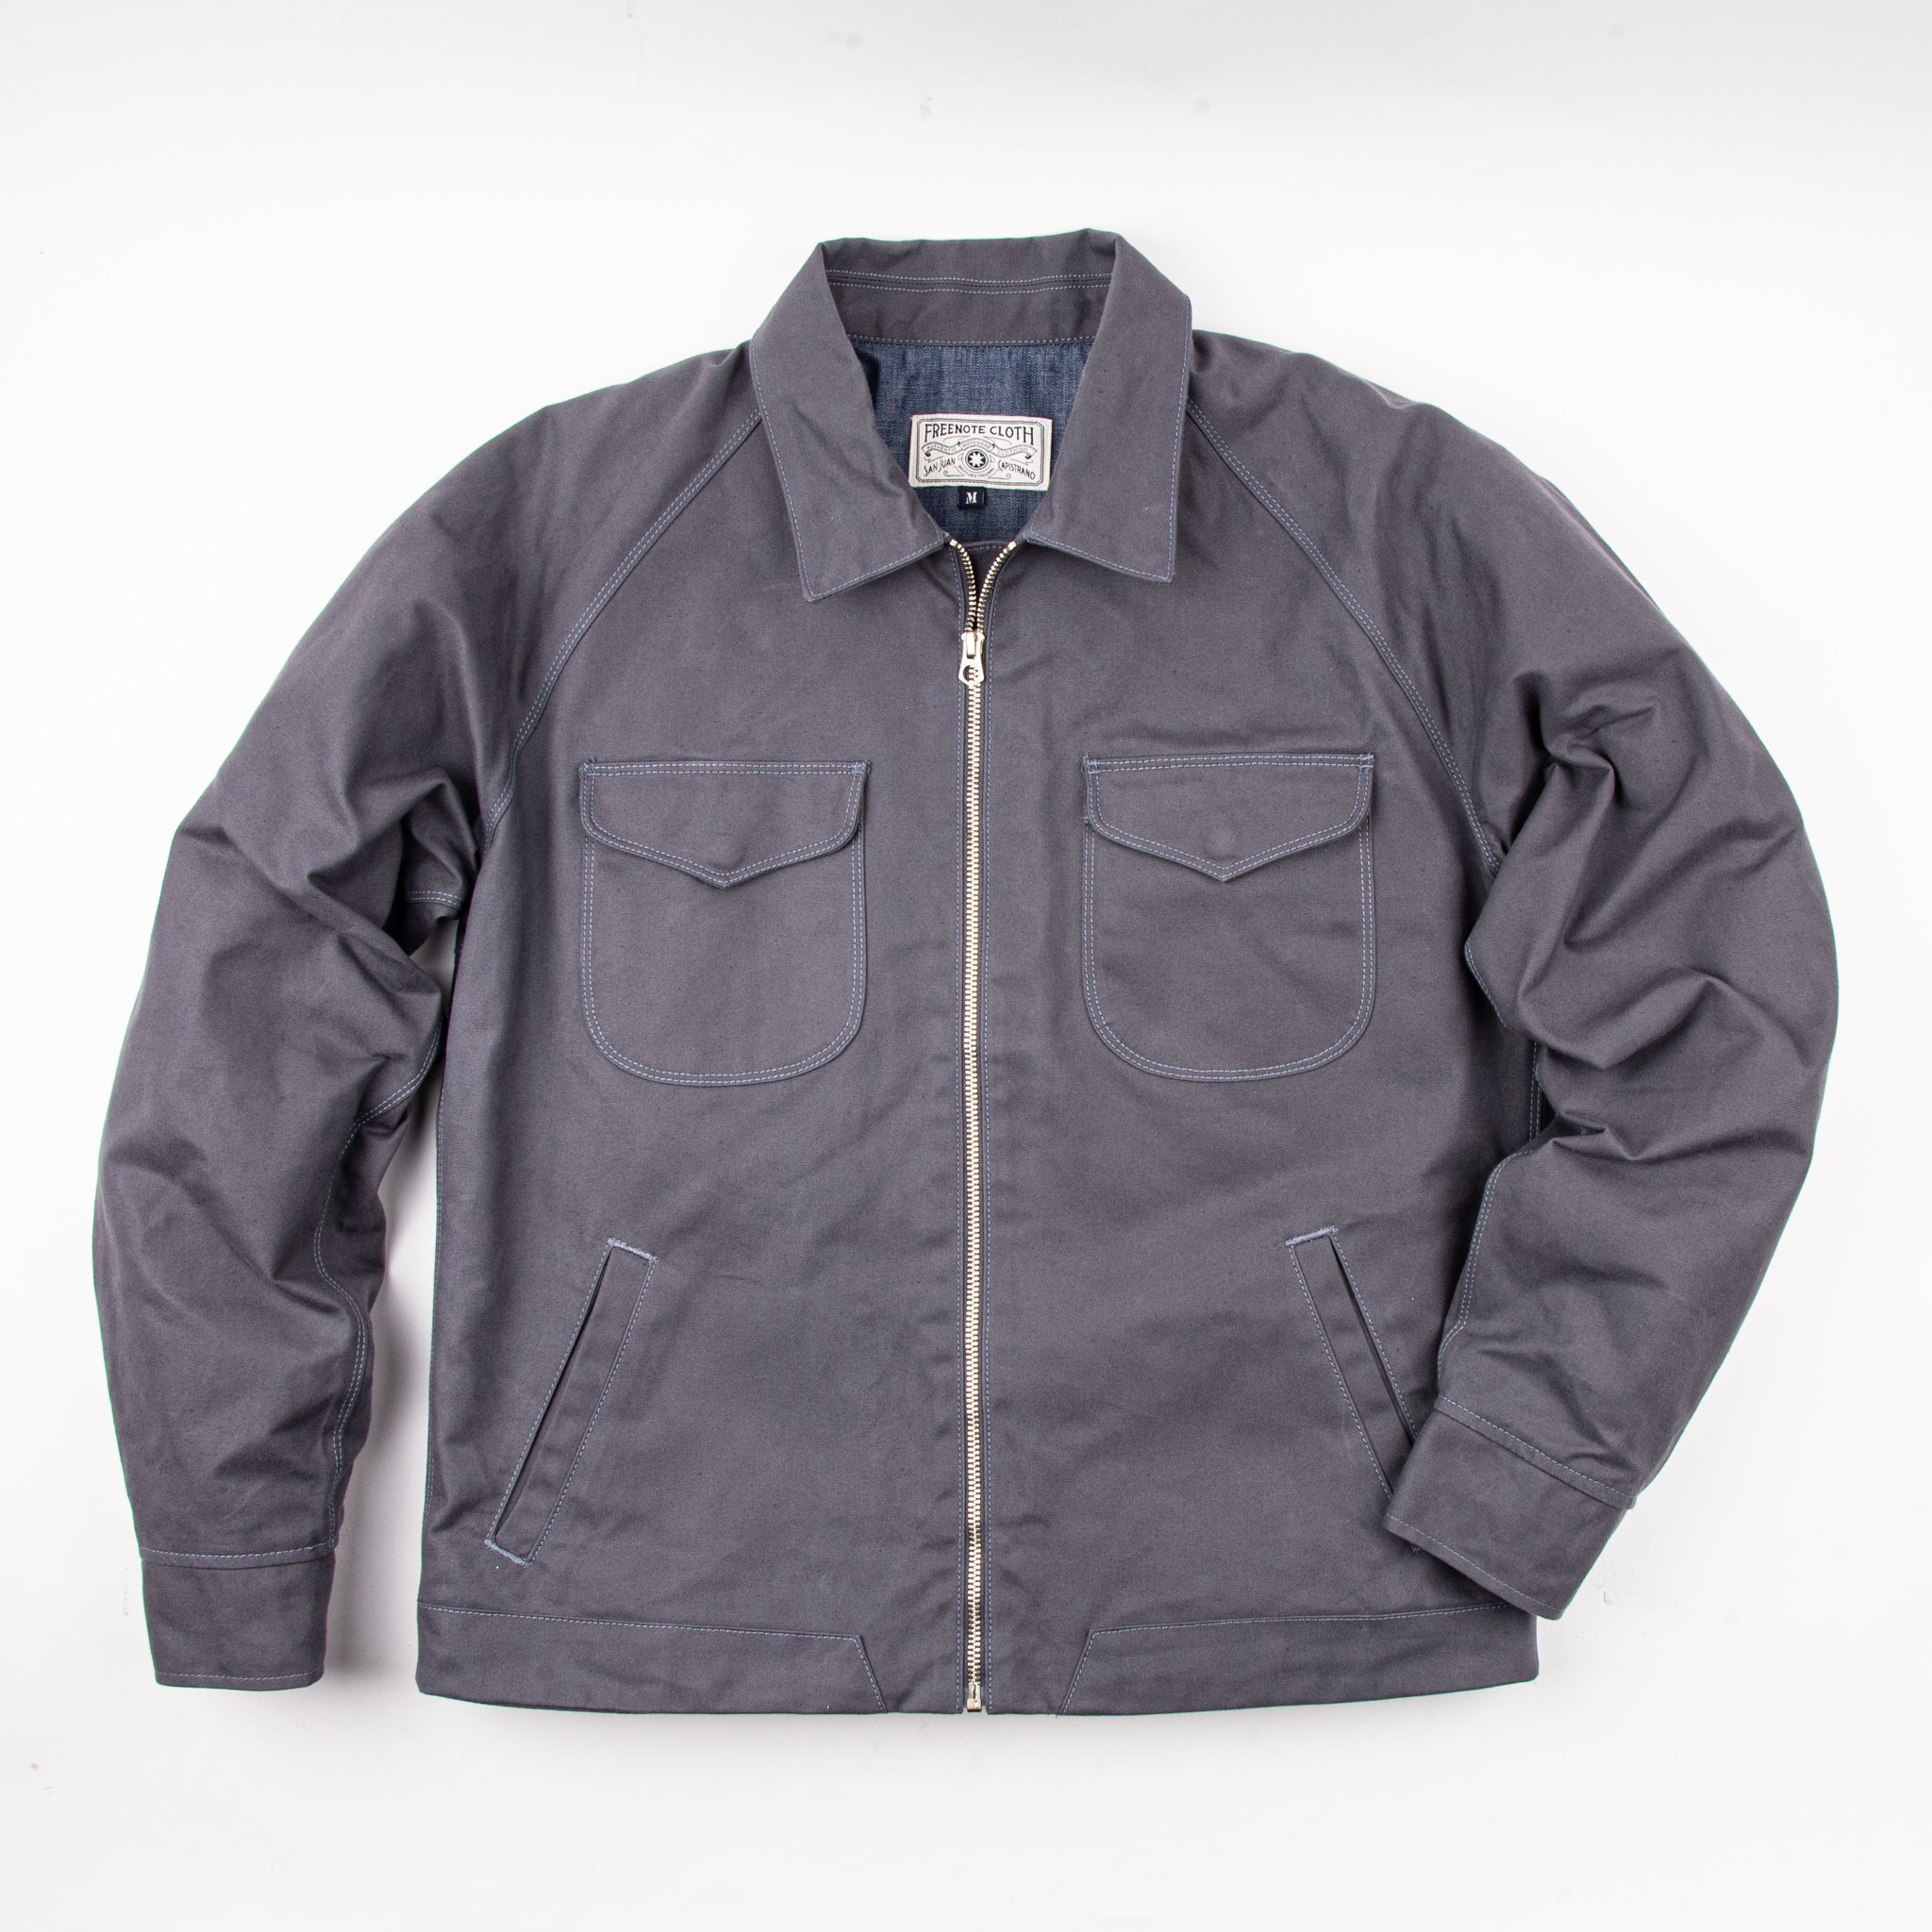 The Garage Jacket, Clemens Slate | Bucko! in Peekskill, NY - Clothing ...